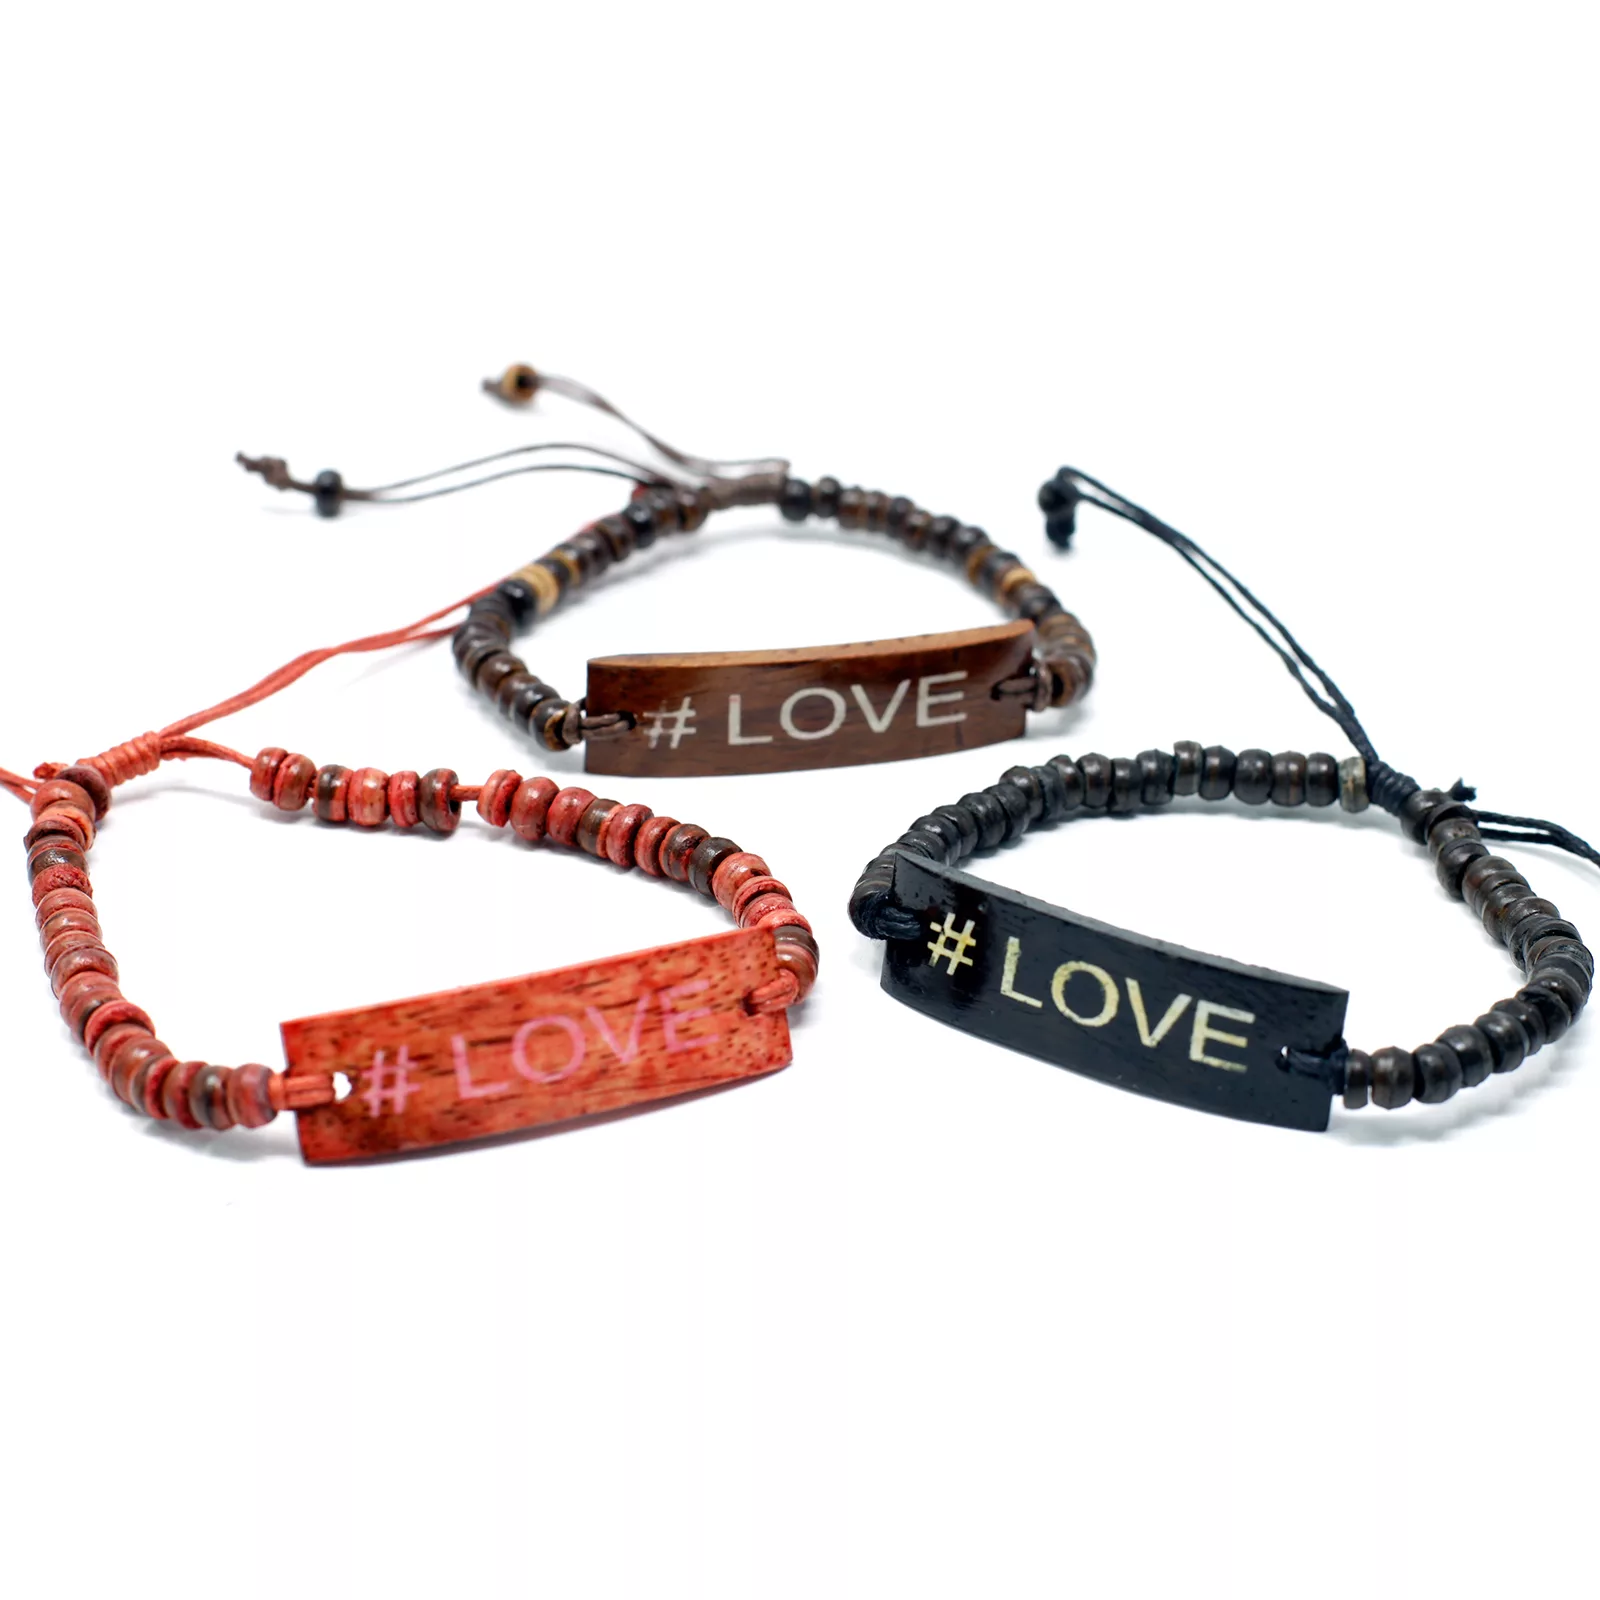 Coco Slogan Bracelets – #Love